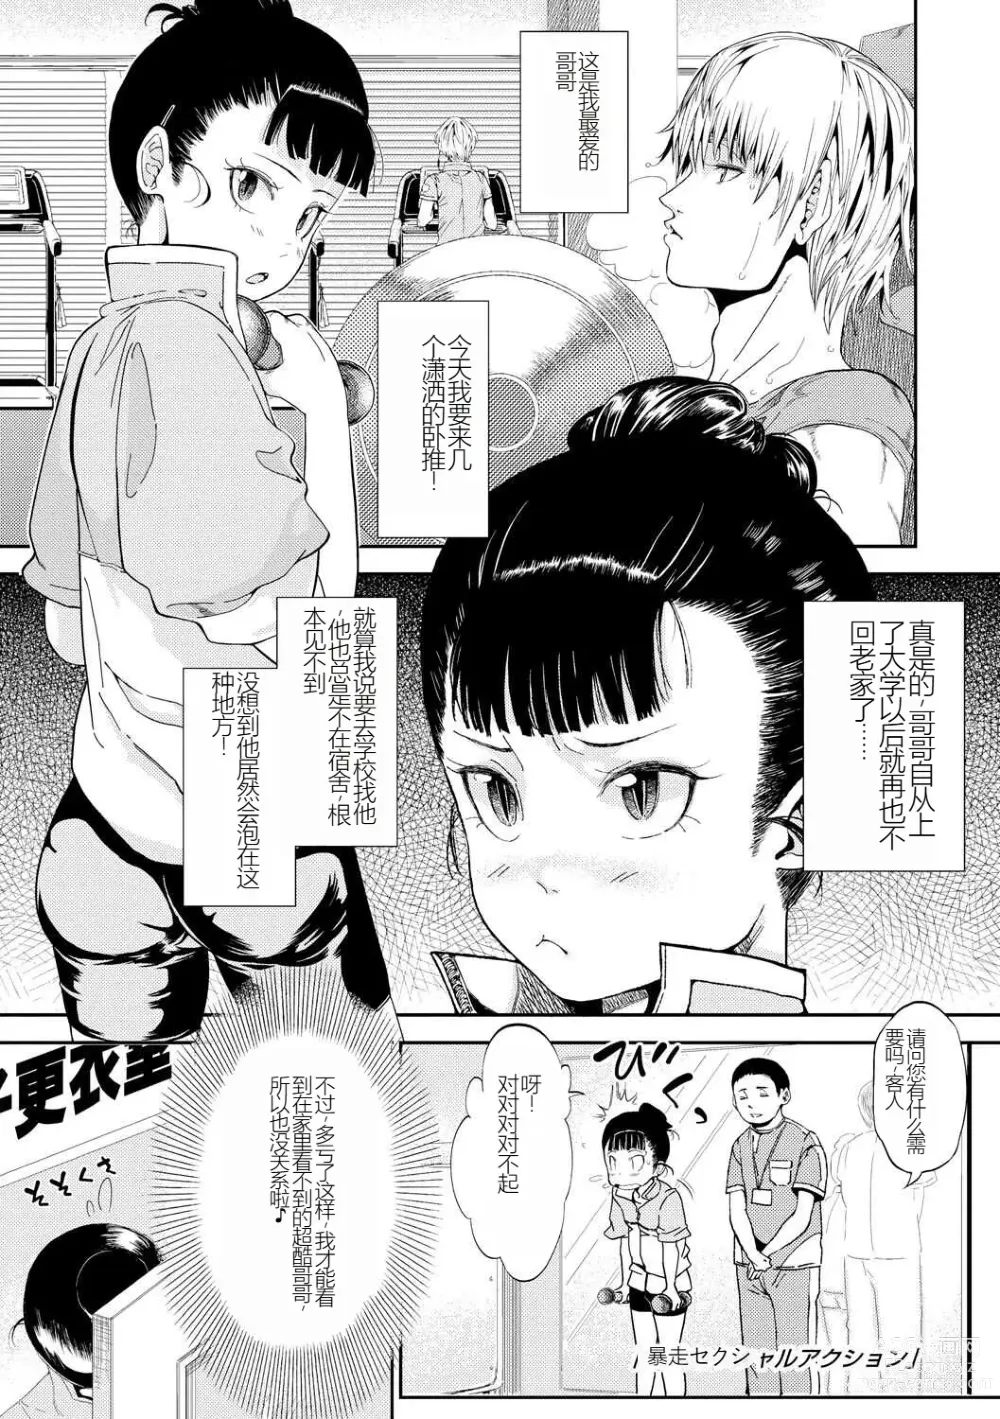 Page 1 of manga Bousou Sexual Action